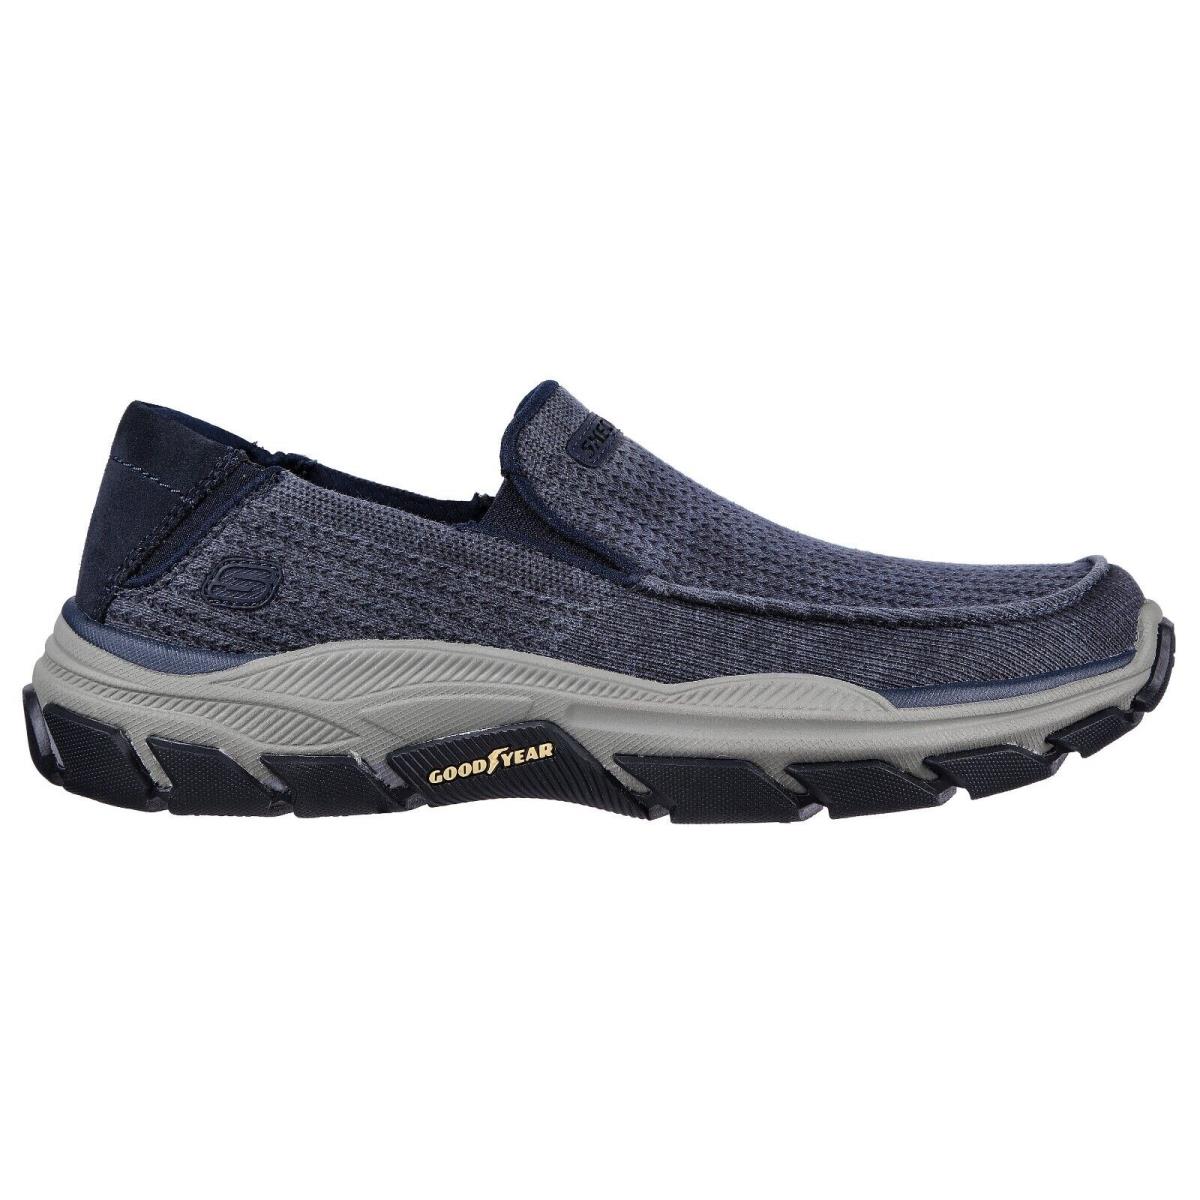 Skechers shoes Respected Vernon - Navy 10